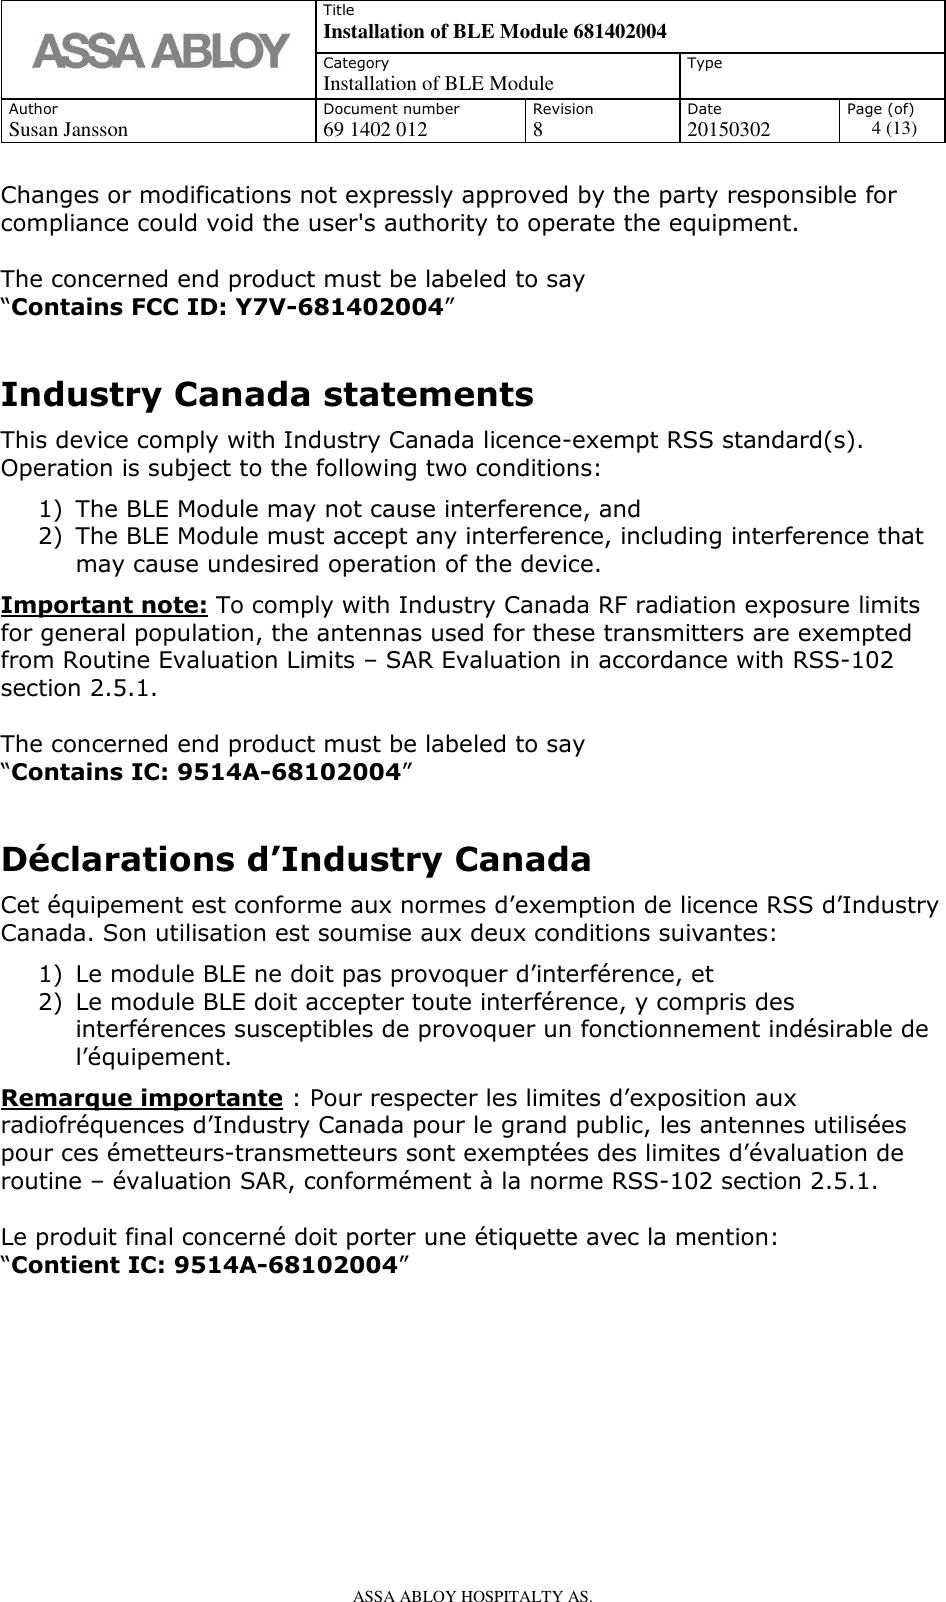   Title Installation of BLE Module 681402004 Category Installation of BLE Module Type  Author Document number Revision Date Page (of) Susan Jansson 69 1402 012 8 20150302 4 (13)    ASSA ABLOY HOSPITALTY AS.   Changes or modifications not expressly approved by the party responsible for compliance could void the user&apos;s authority to operate the equipment.  The concerned end product must be labeled to say “Contains FCC ID: Y7V-681402004”  Industry Canada statements This device comply with Industry Canada licence-exempt RSS standard(s). Operation is subject to the following two conditions: 1) The BLE Module may not cause interference, and 2) The BLE Module must accept any interference, including interference that may cause undesired operation of the device. Important note: To comply with Industry Canada RF radiation exposure limits for general population, the antennas used for these transmitters are exempted from Routine Evaluation Limits – SAR Evaluation in accordance with RSS-102 section 2.5.1.  The concerned end product must be labeled to say  “Contains IC: 9514A-68102004”  Déclarations d’Industry Canada Cet équipement est conforme aux normes d’exemption de licence RSS d’Industry Canada. Son utilisation est soumise aux deux conditions suivantes: 1) Le module BLE ne doit pas provoquer d’interférence, et 2) Le module BLE doit accepter toute interférence, y compris des interférences susceptibles de provoquer un fonctionnement indésirable de l’équipement. Remarque importante : Pour respecter les limites d’exposition aux radiofréquences d’Industry Canada pour le grand public, les antennes utilisées pour ces émetteurs-transmetteurs sont exemptées des limites d’évaluation de routine – évaluation SAR, conformément à la norme RSS-102 section 2.5.1.     Le produit final concerné doit porter une étiquette avec la mention: “Contient IC: 9514A-68102004”        